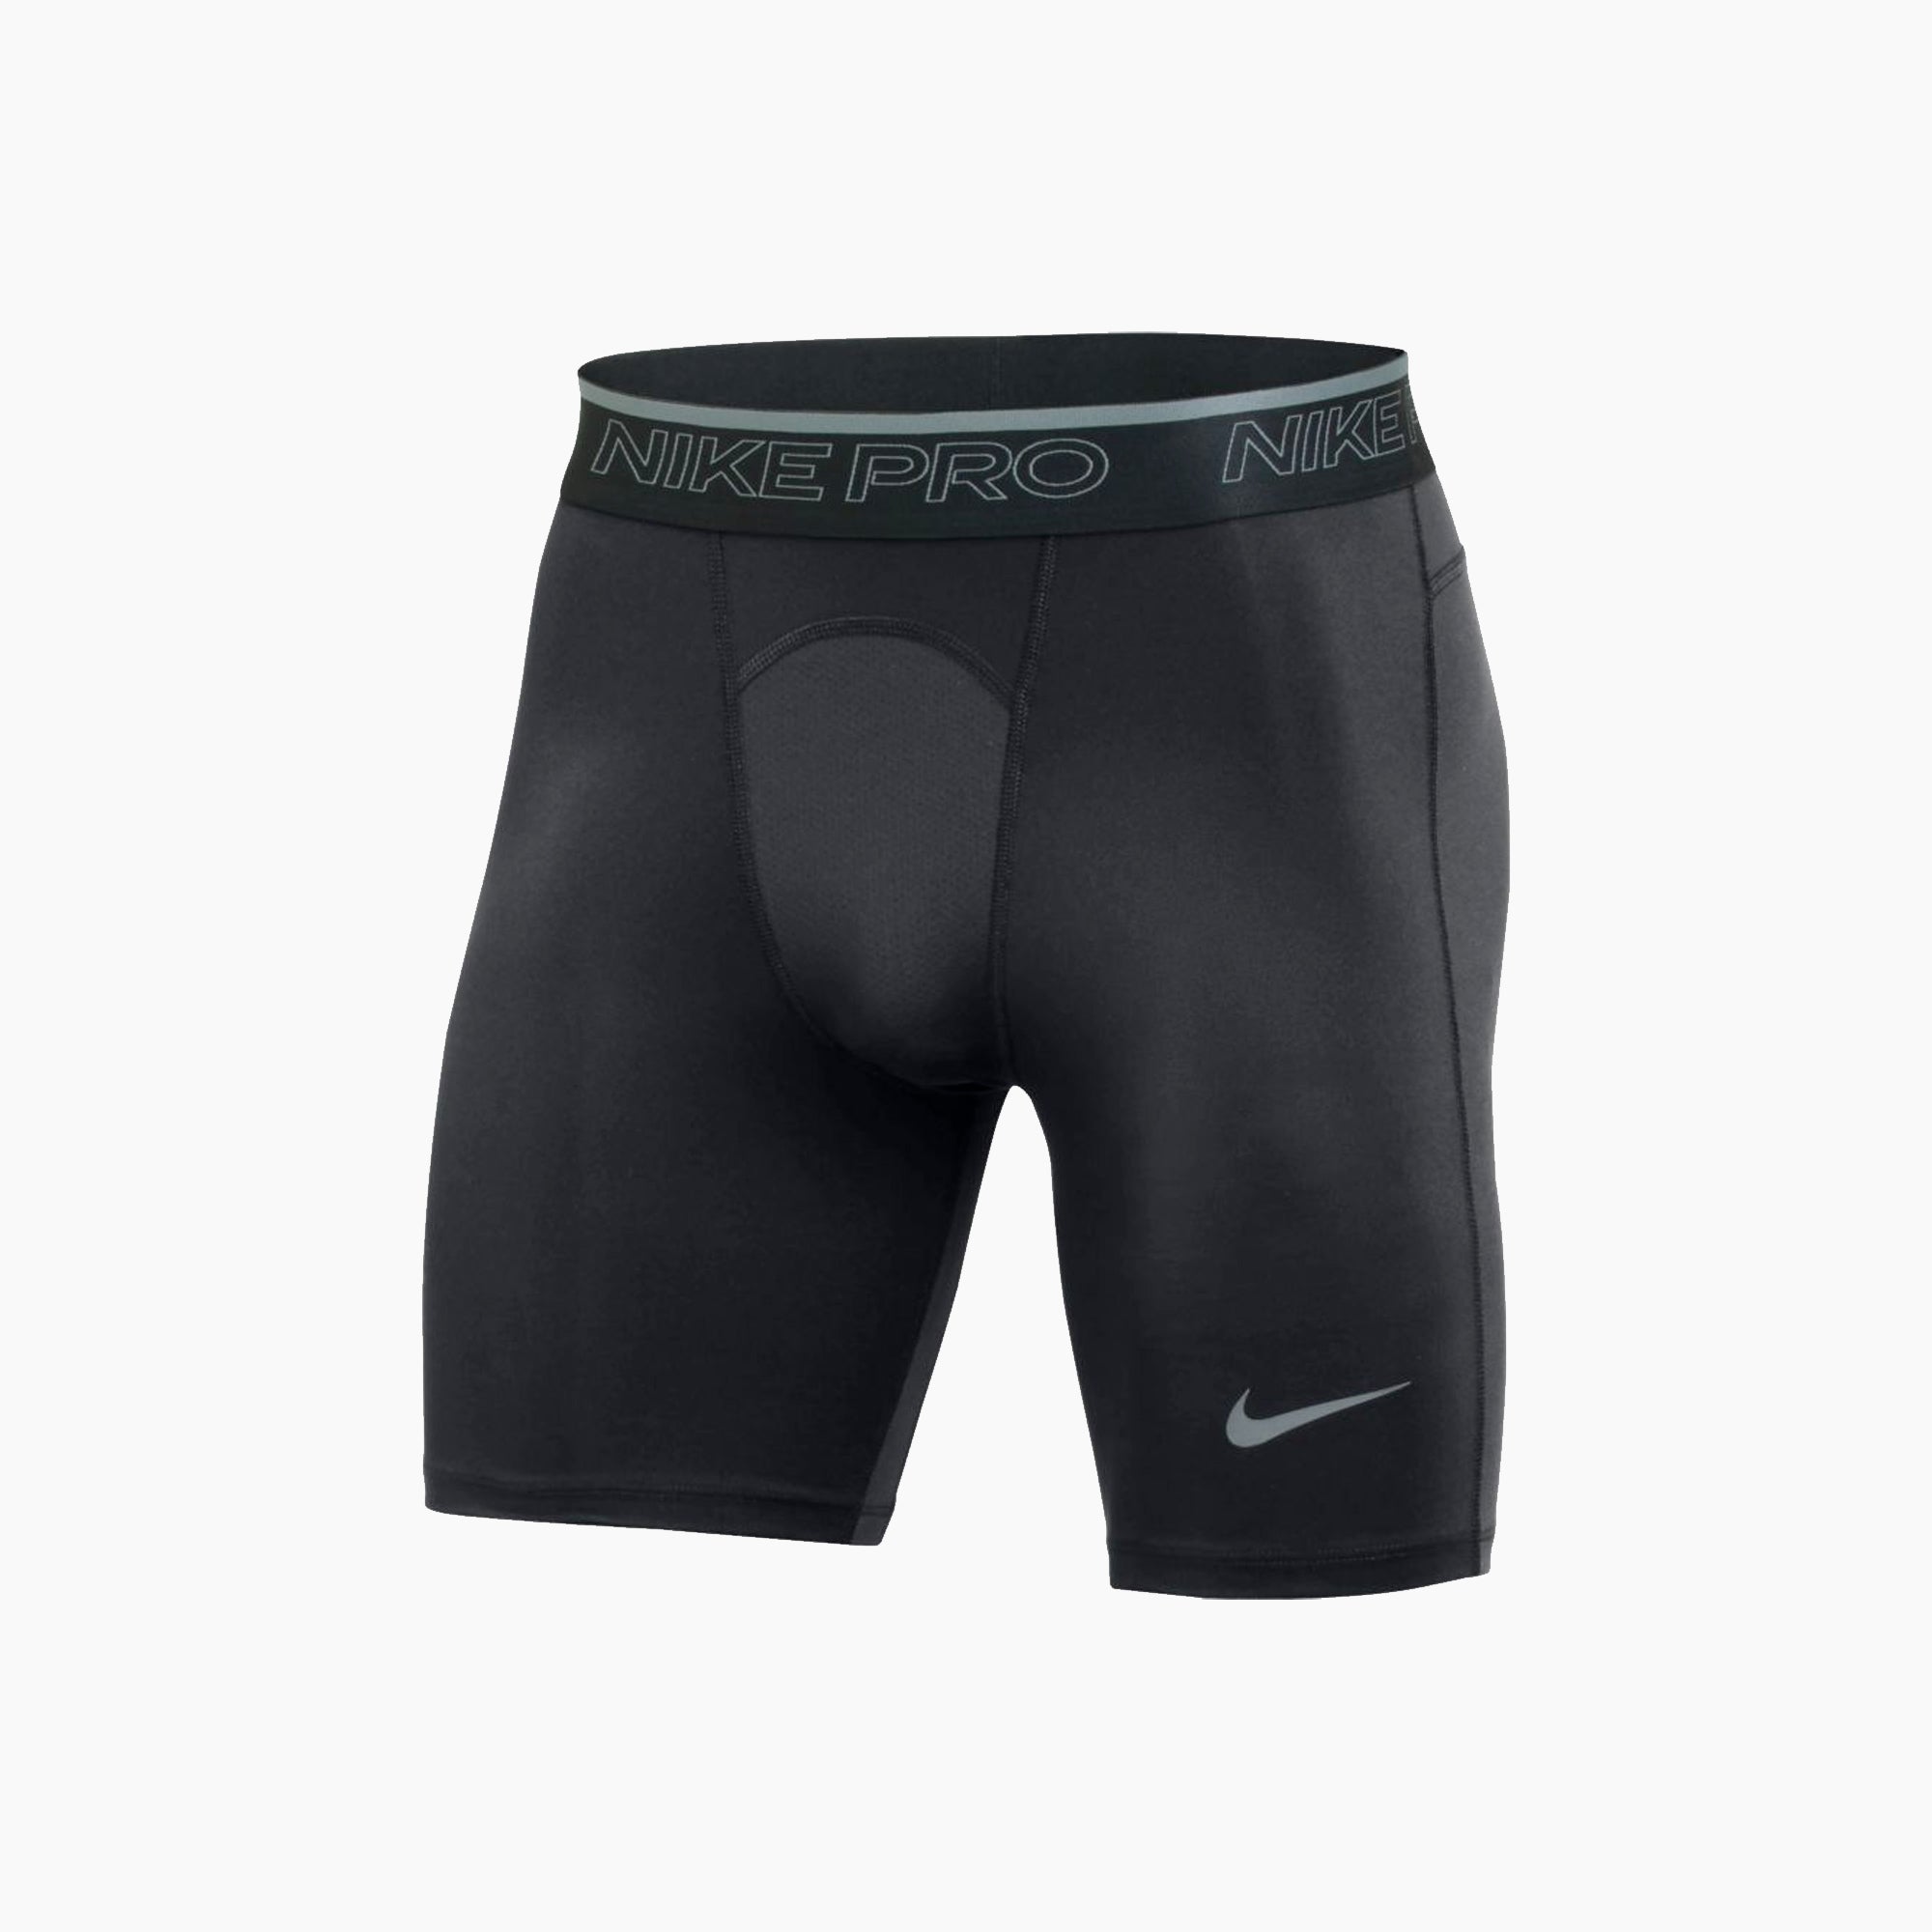  Men's Sports Compression Shorts - Nike / Men's Sports